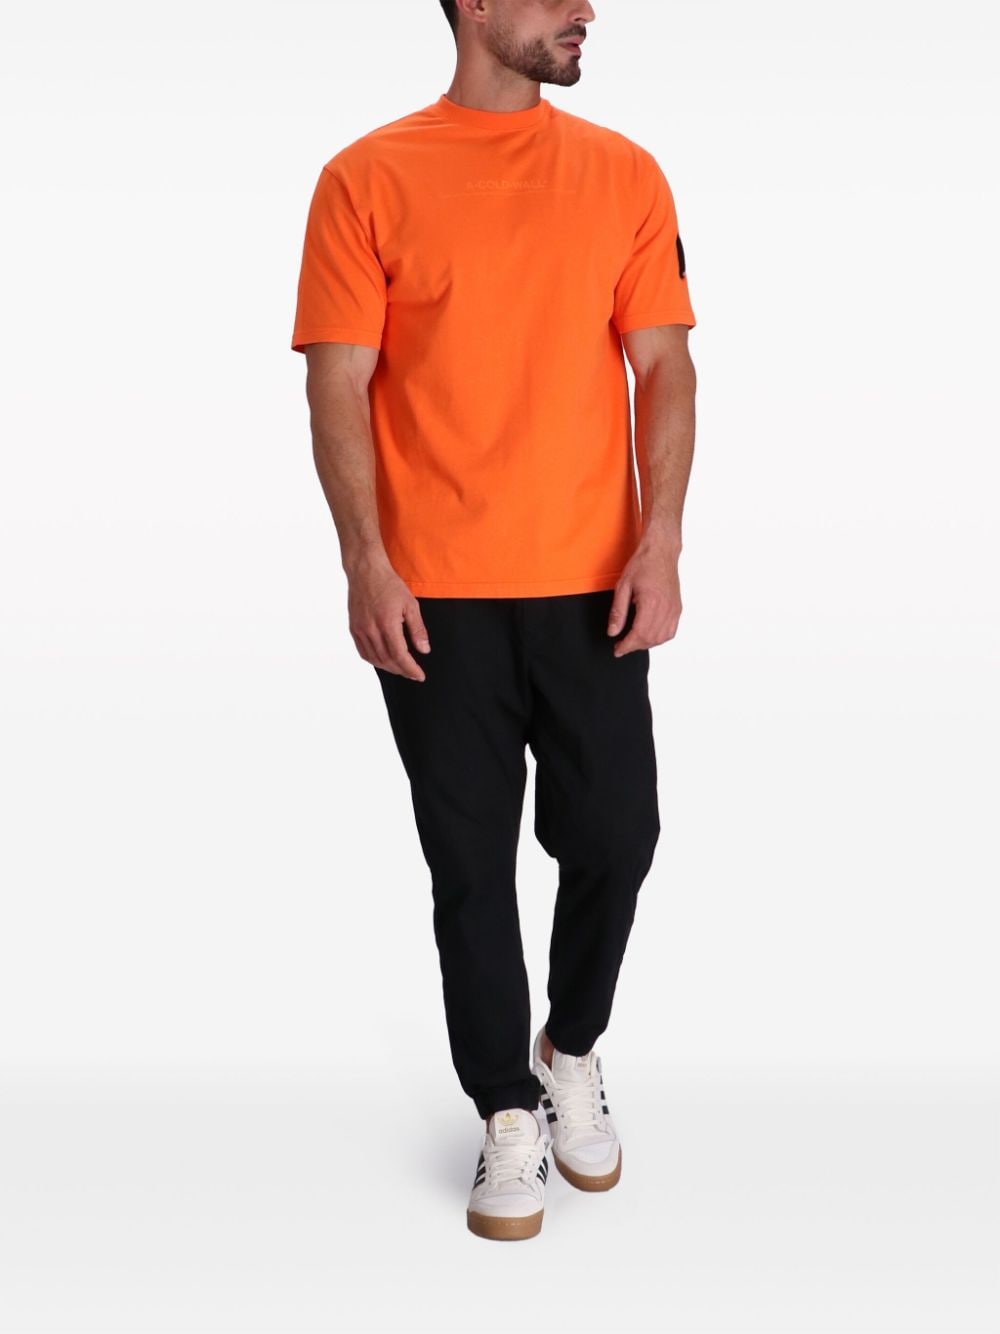 A-COLD-WALL* Katoenen T-shirt Oranje